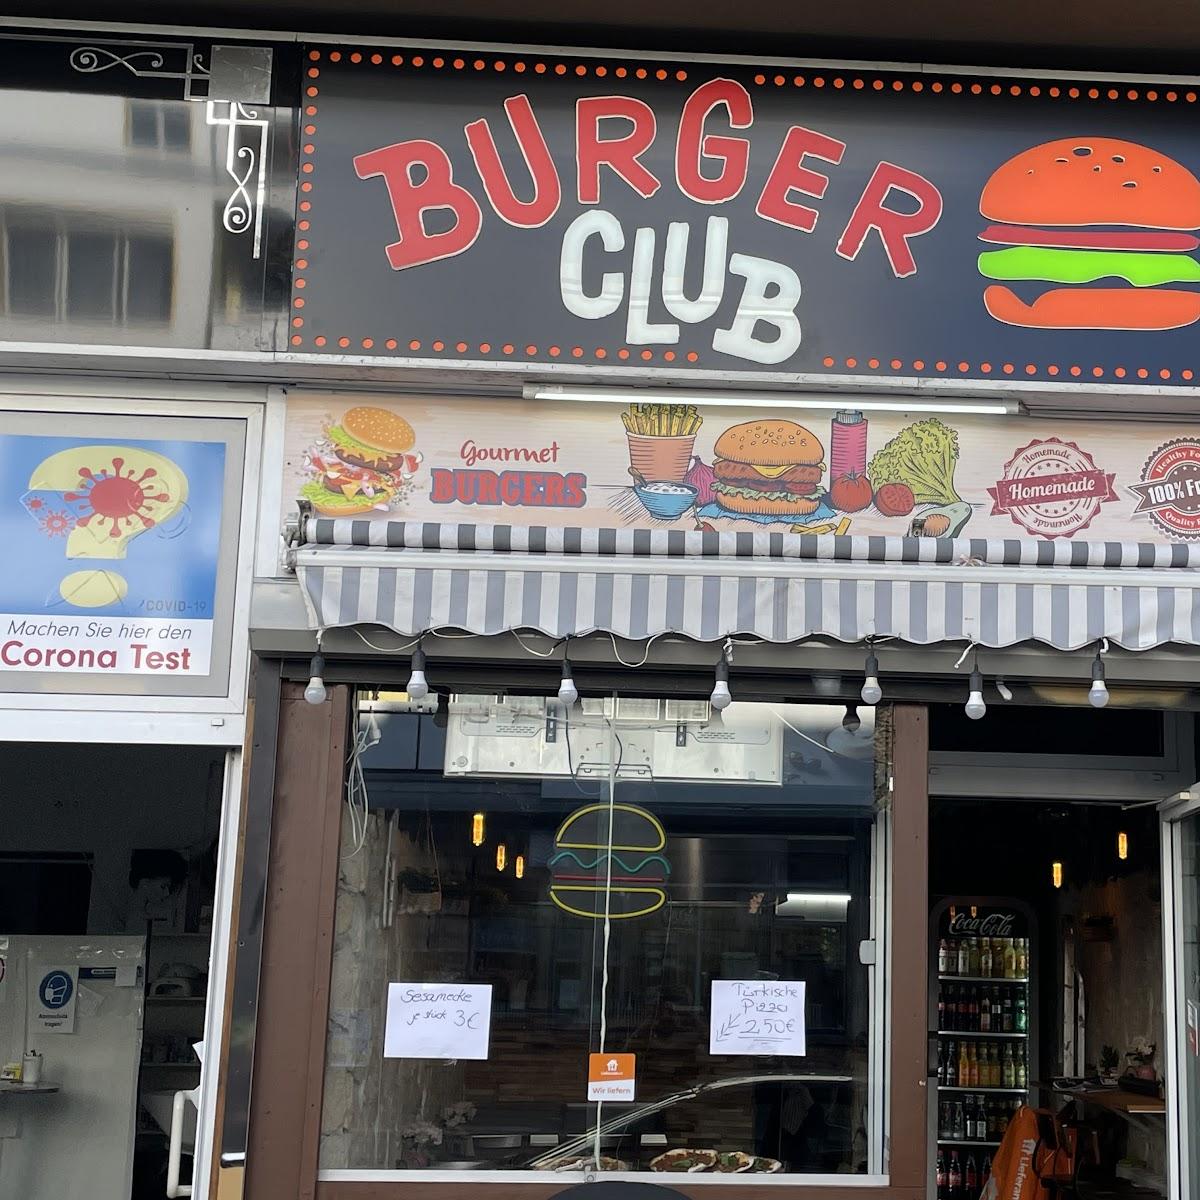 Restaurant "Burger Club" in Berlin